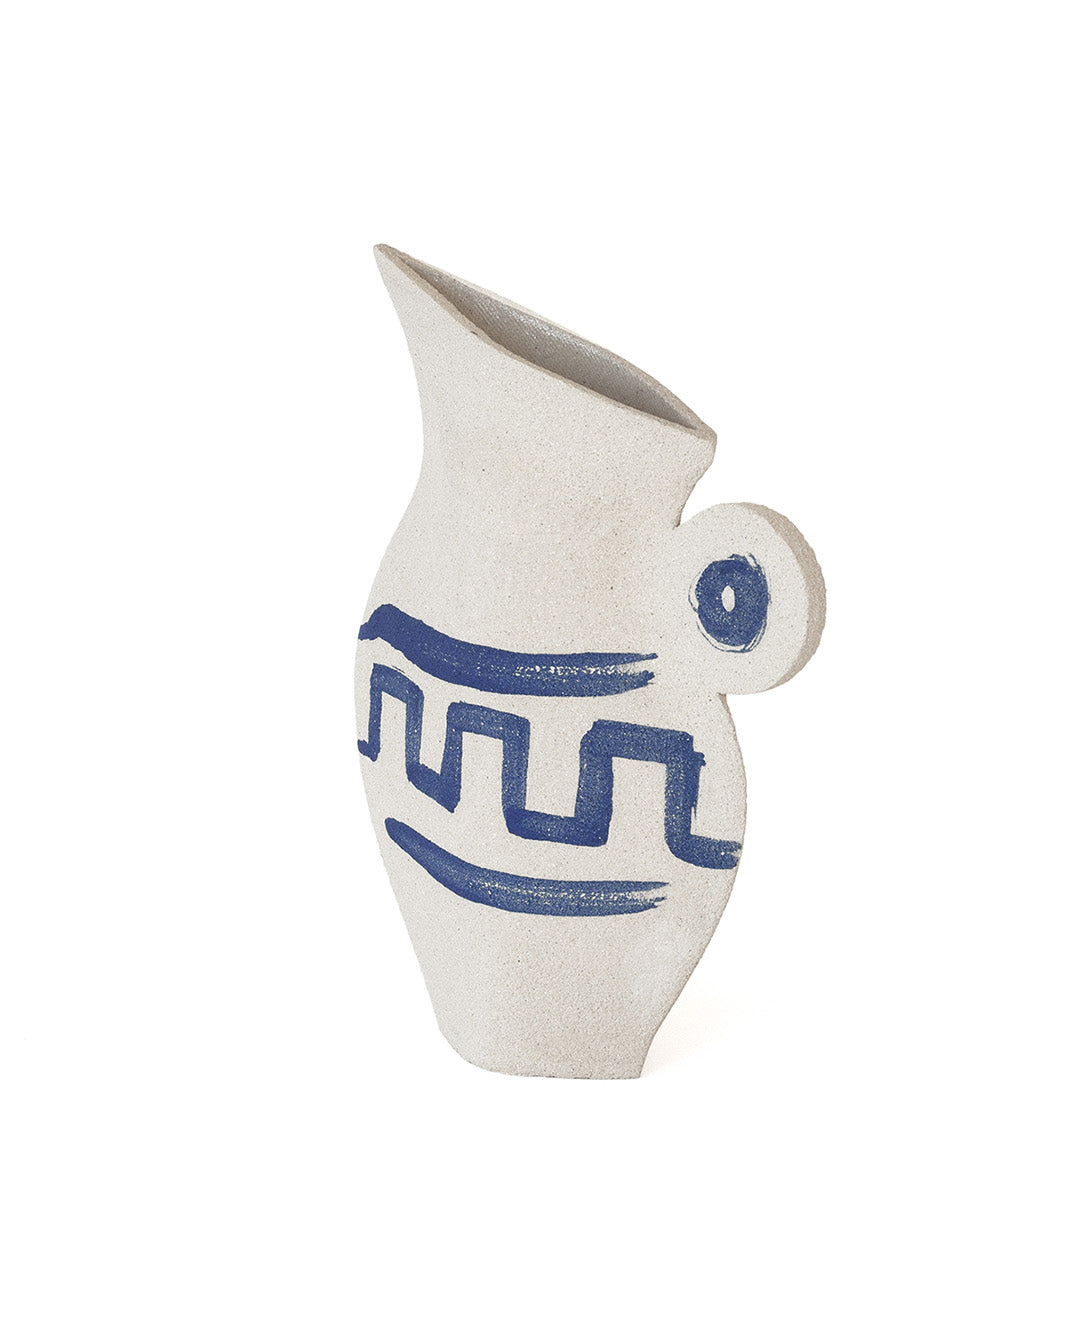 ‘Greek Pitcher’ Ceramic Illustrated Vase